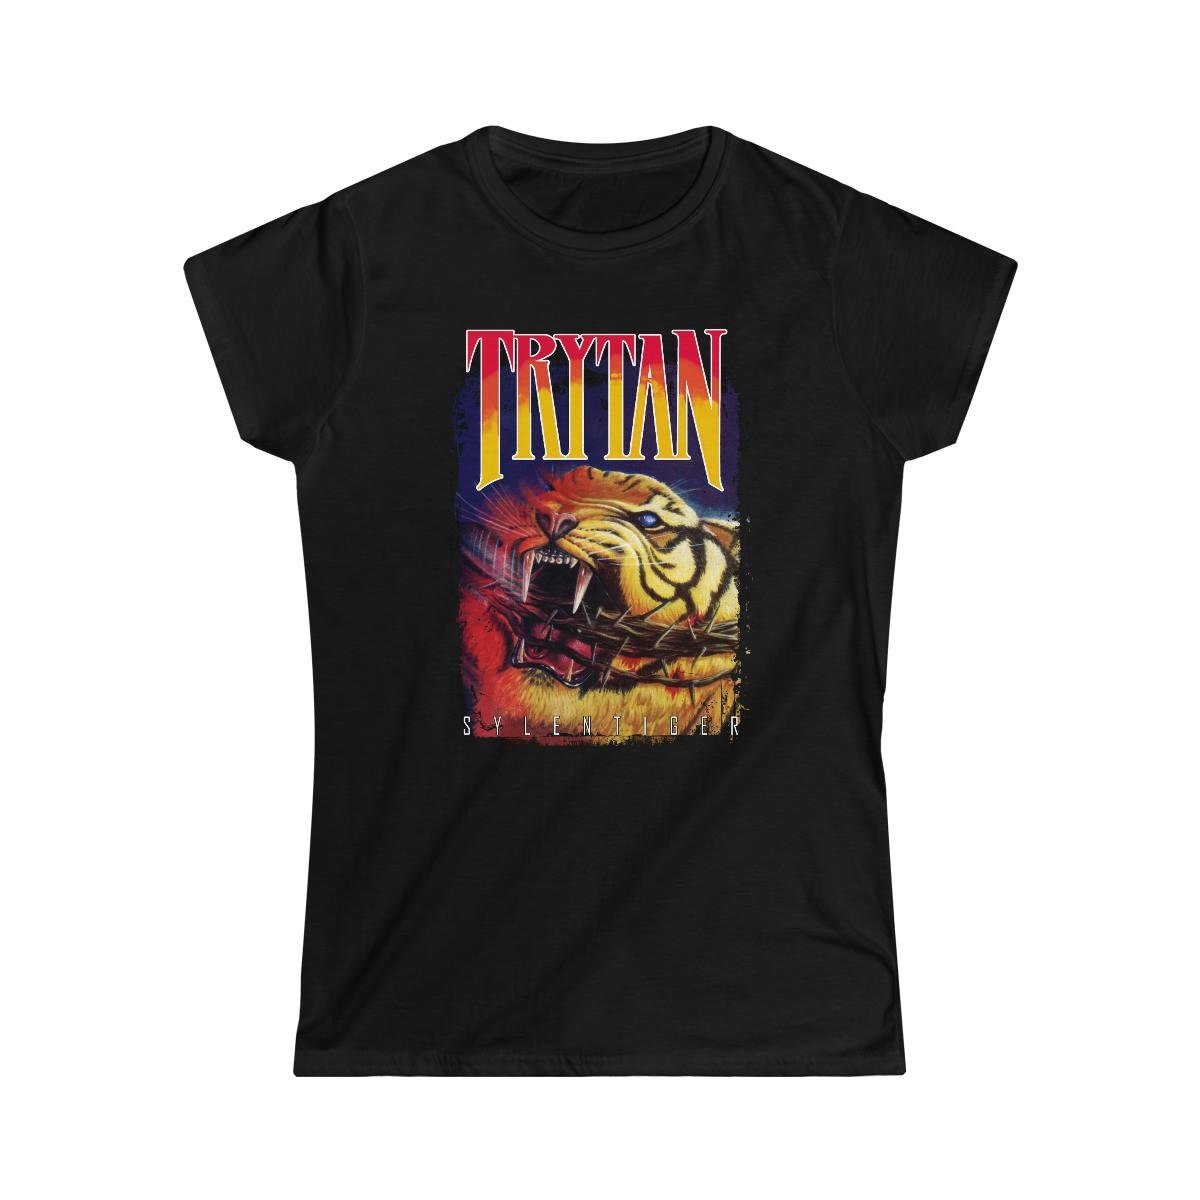 Trytan – Sylentiger Women’s Tshirt (2 Sided)